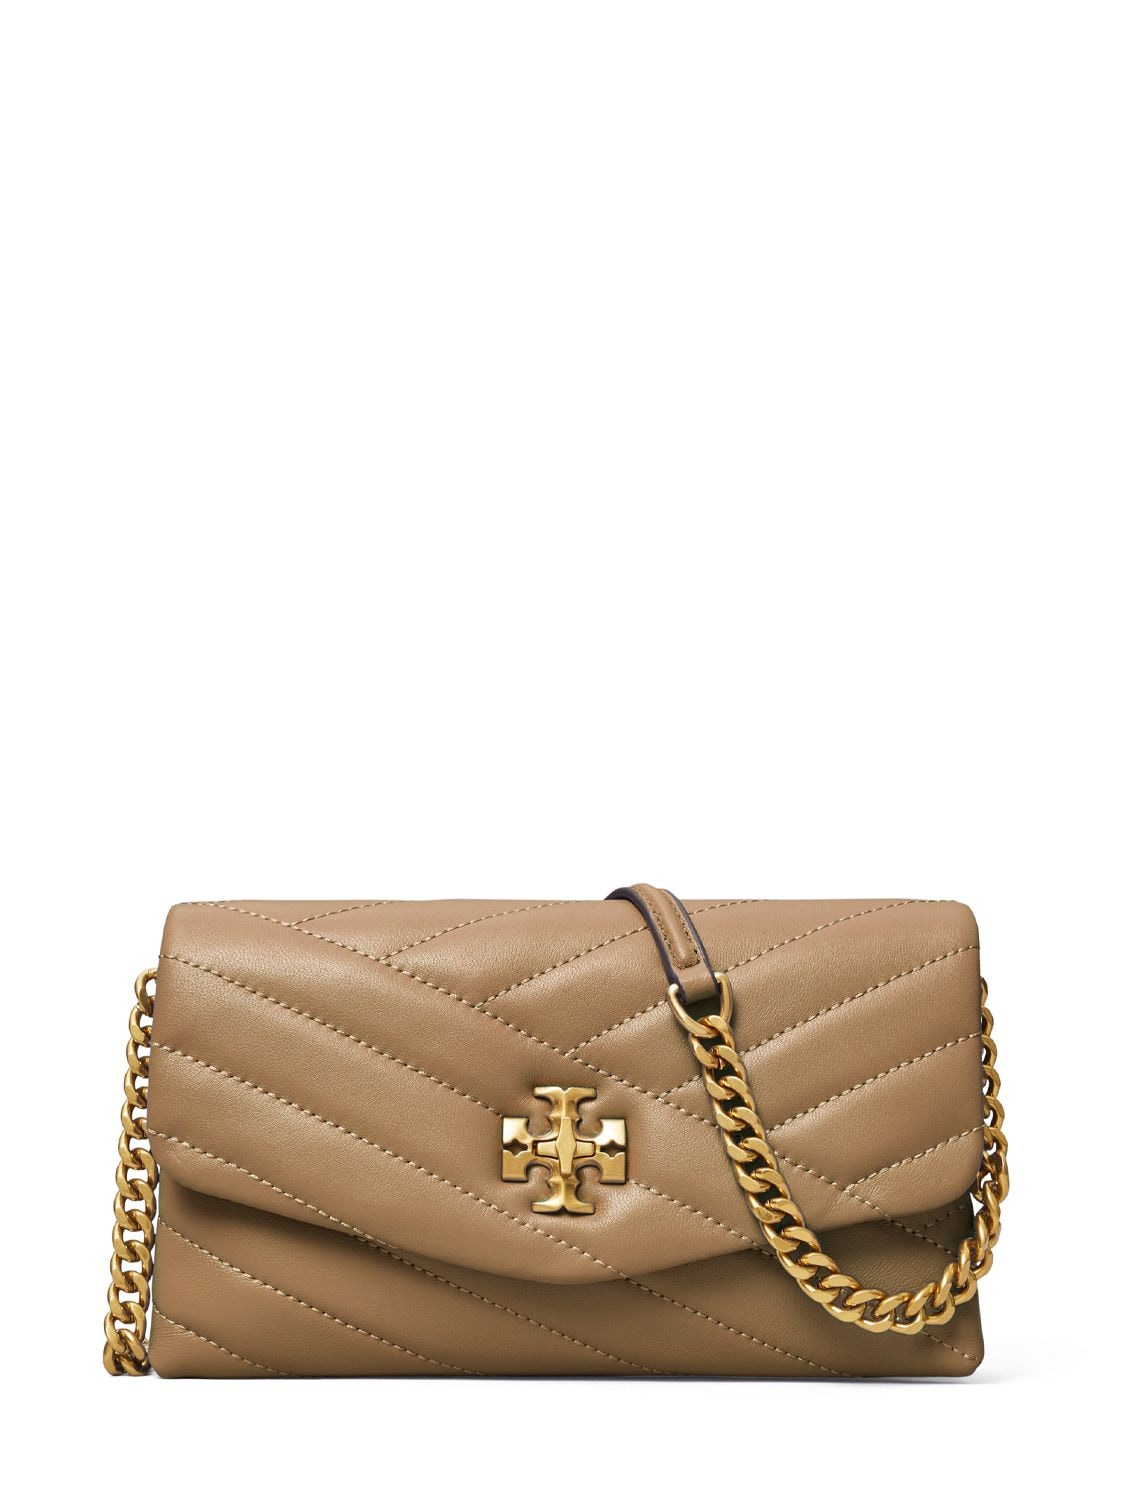 Kira Chevron Leather Shoulder Bag